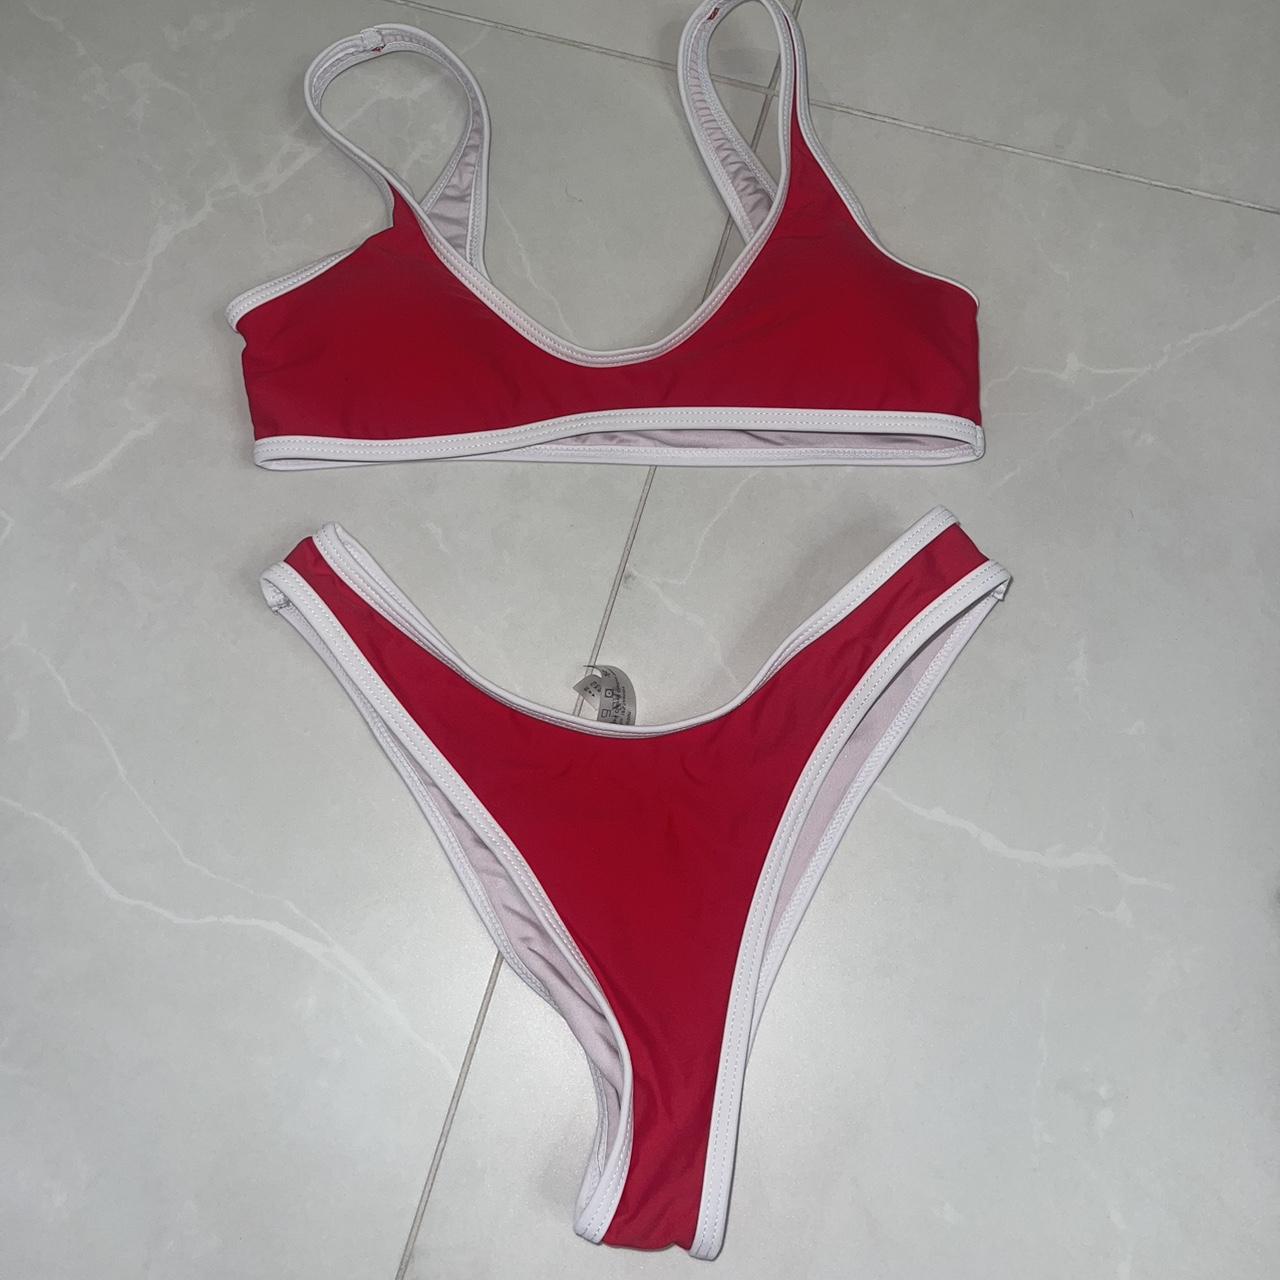 ZAFUL Women's Red and White Bikinis-and-tankini-sets